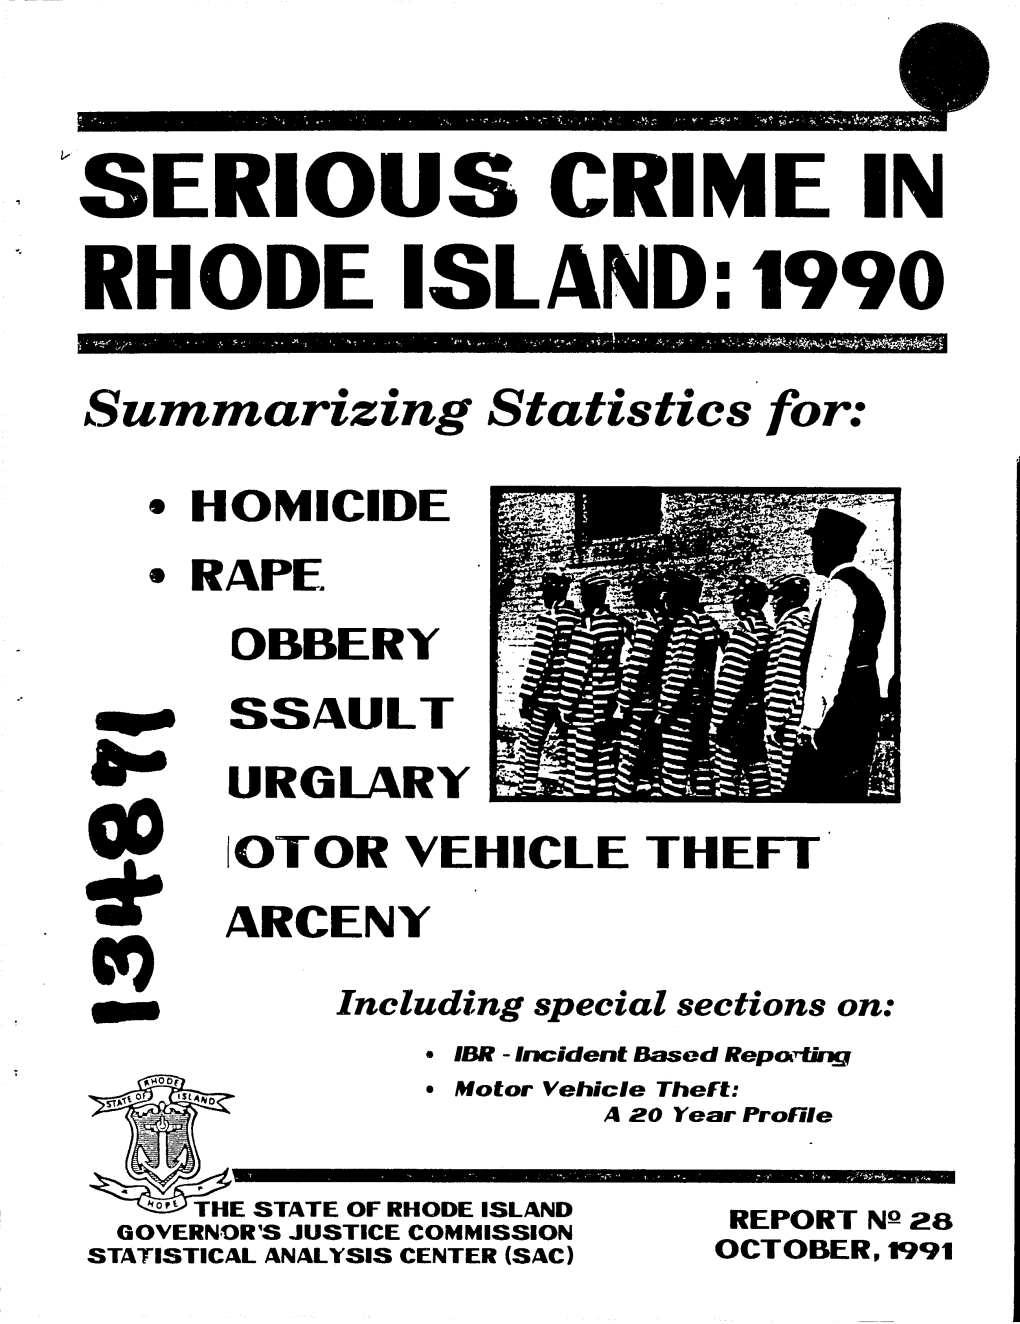 Serious Crime in Rhode Island a Ten Year Comparison